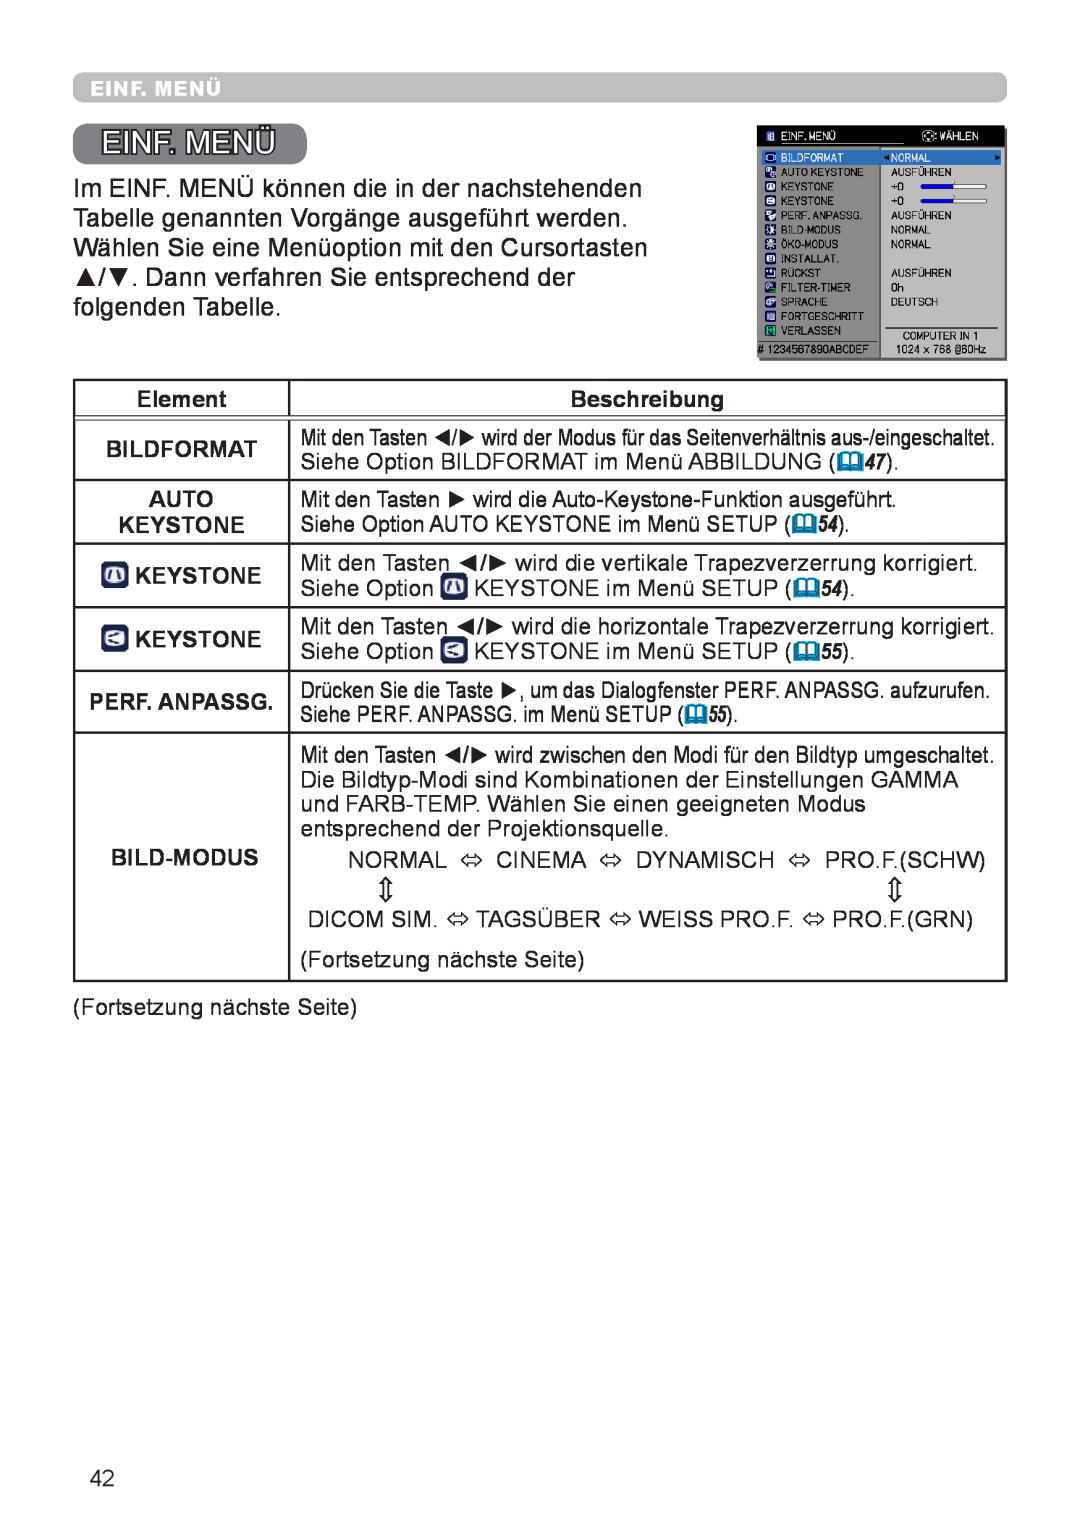 InFocus IN5132 user manual Einf. Menü, Element, Beschreibung, Bildformat, Auto, Keystone, Perf. Anpassg, Bild-Modus 